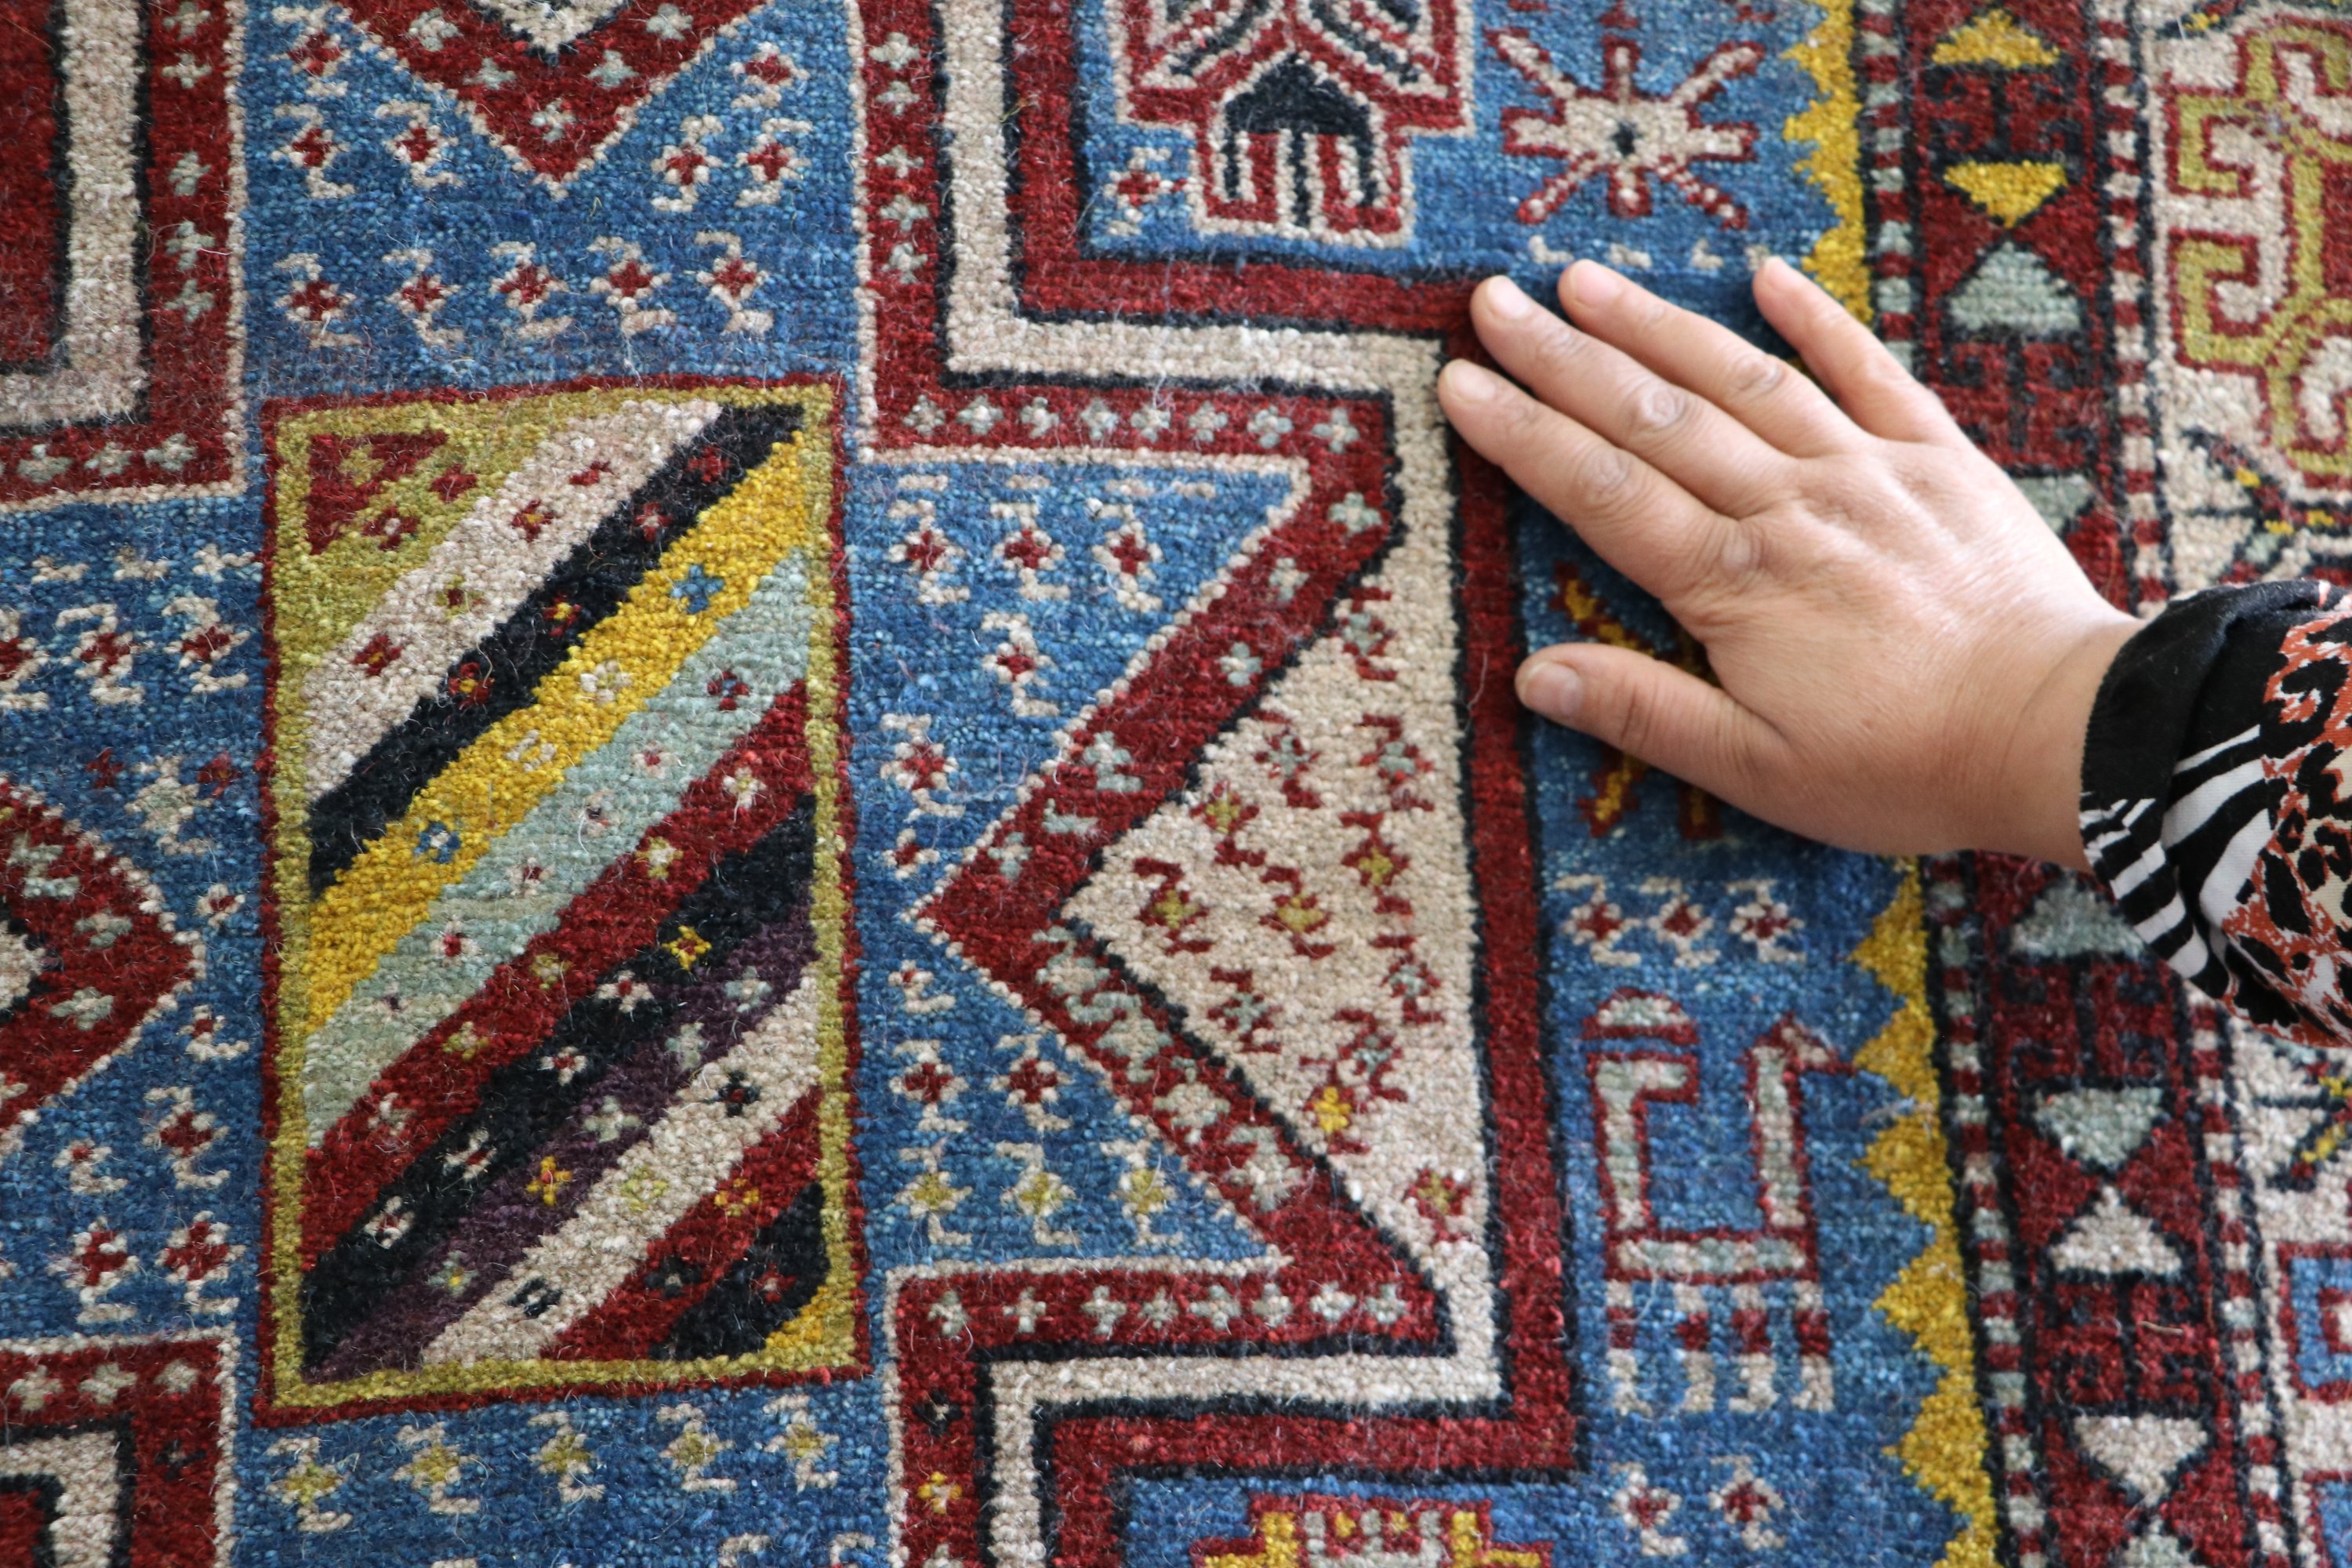 Turkish woven carpets adorn Japanese homes   Daily Sabah